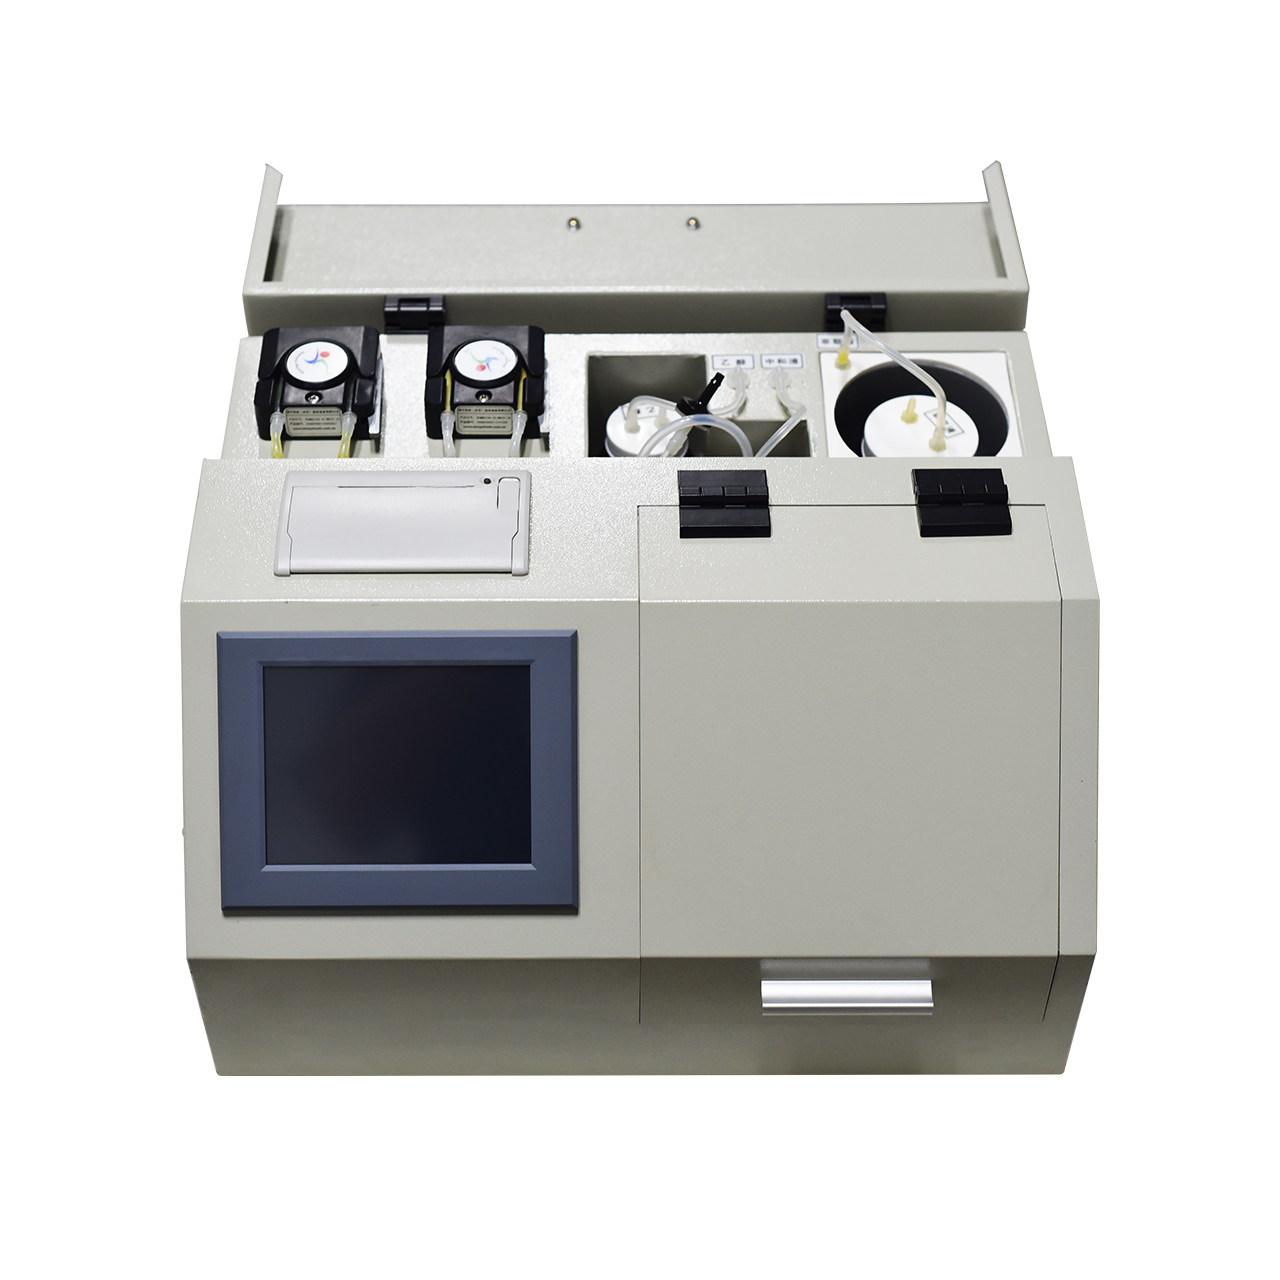 I-Transformer oil Value Tester (i-potentiometric titration)